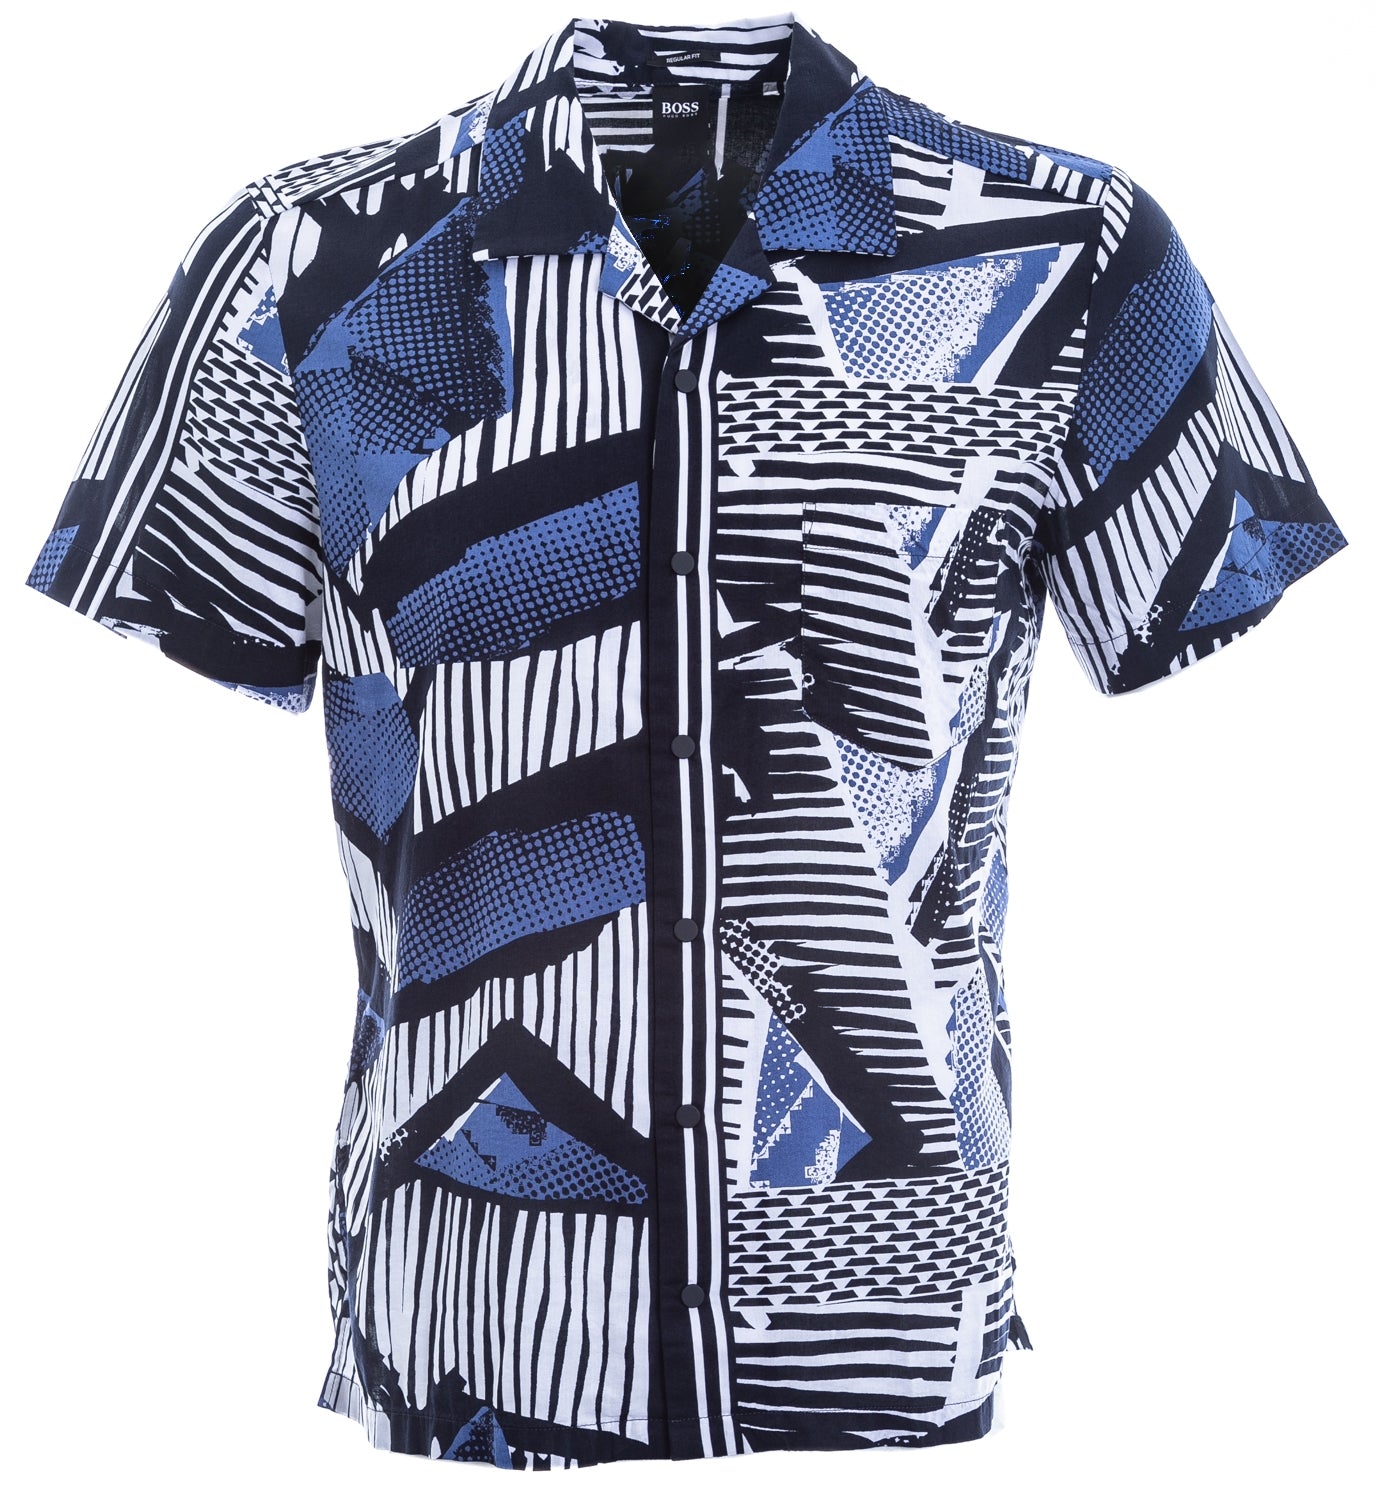 BOSS Rhythm Short Sleeve Shirt in Blue Print